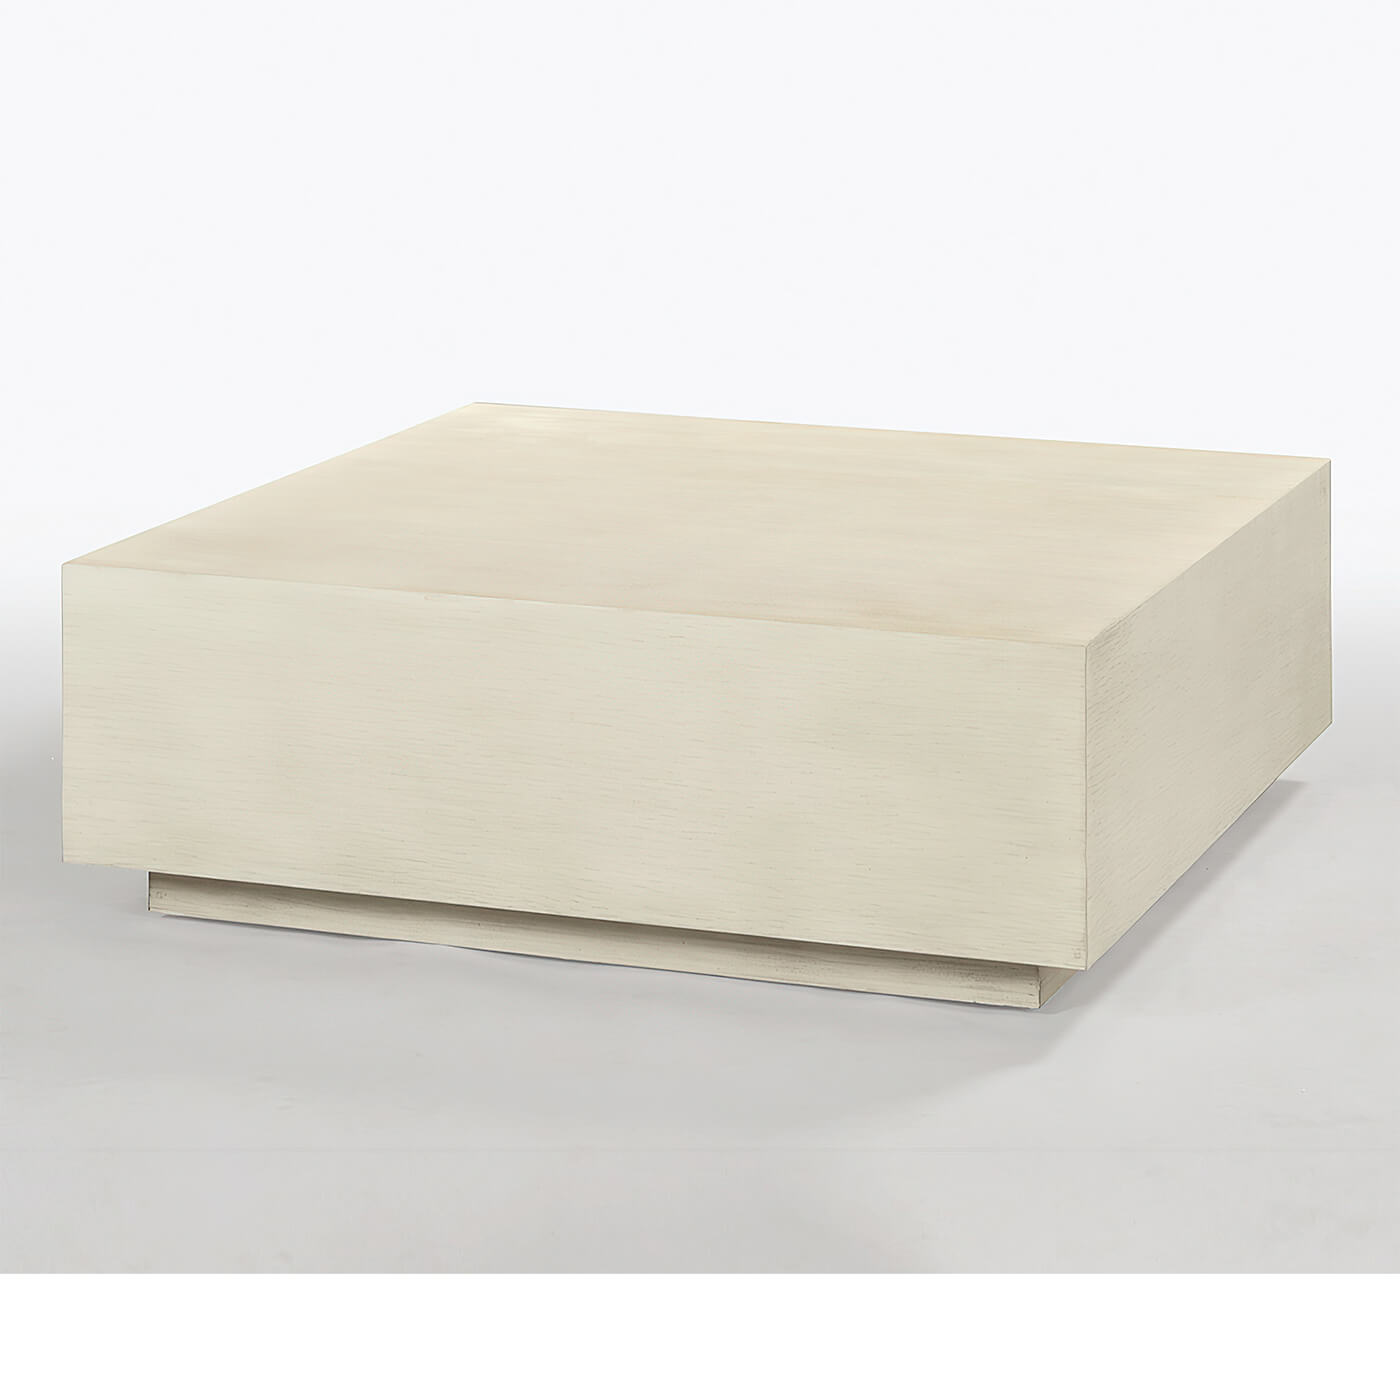 Rustic Modern square coffee table - Drift White - English Georgian America